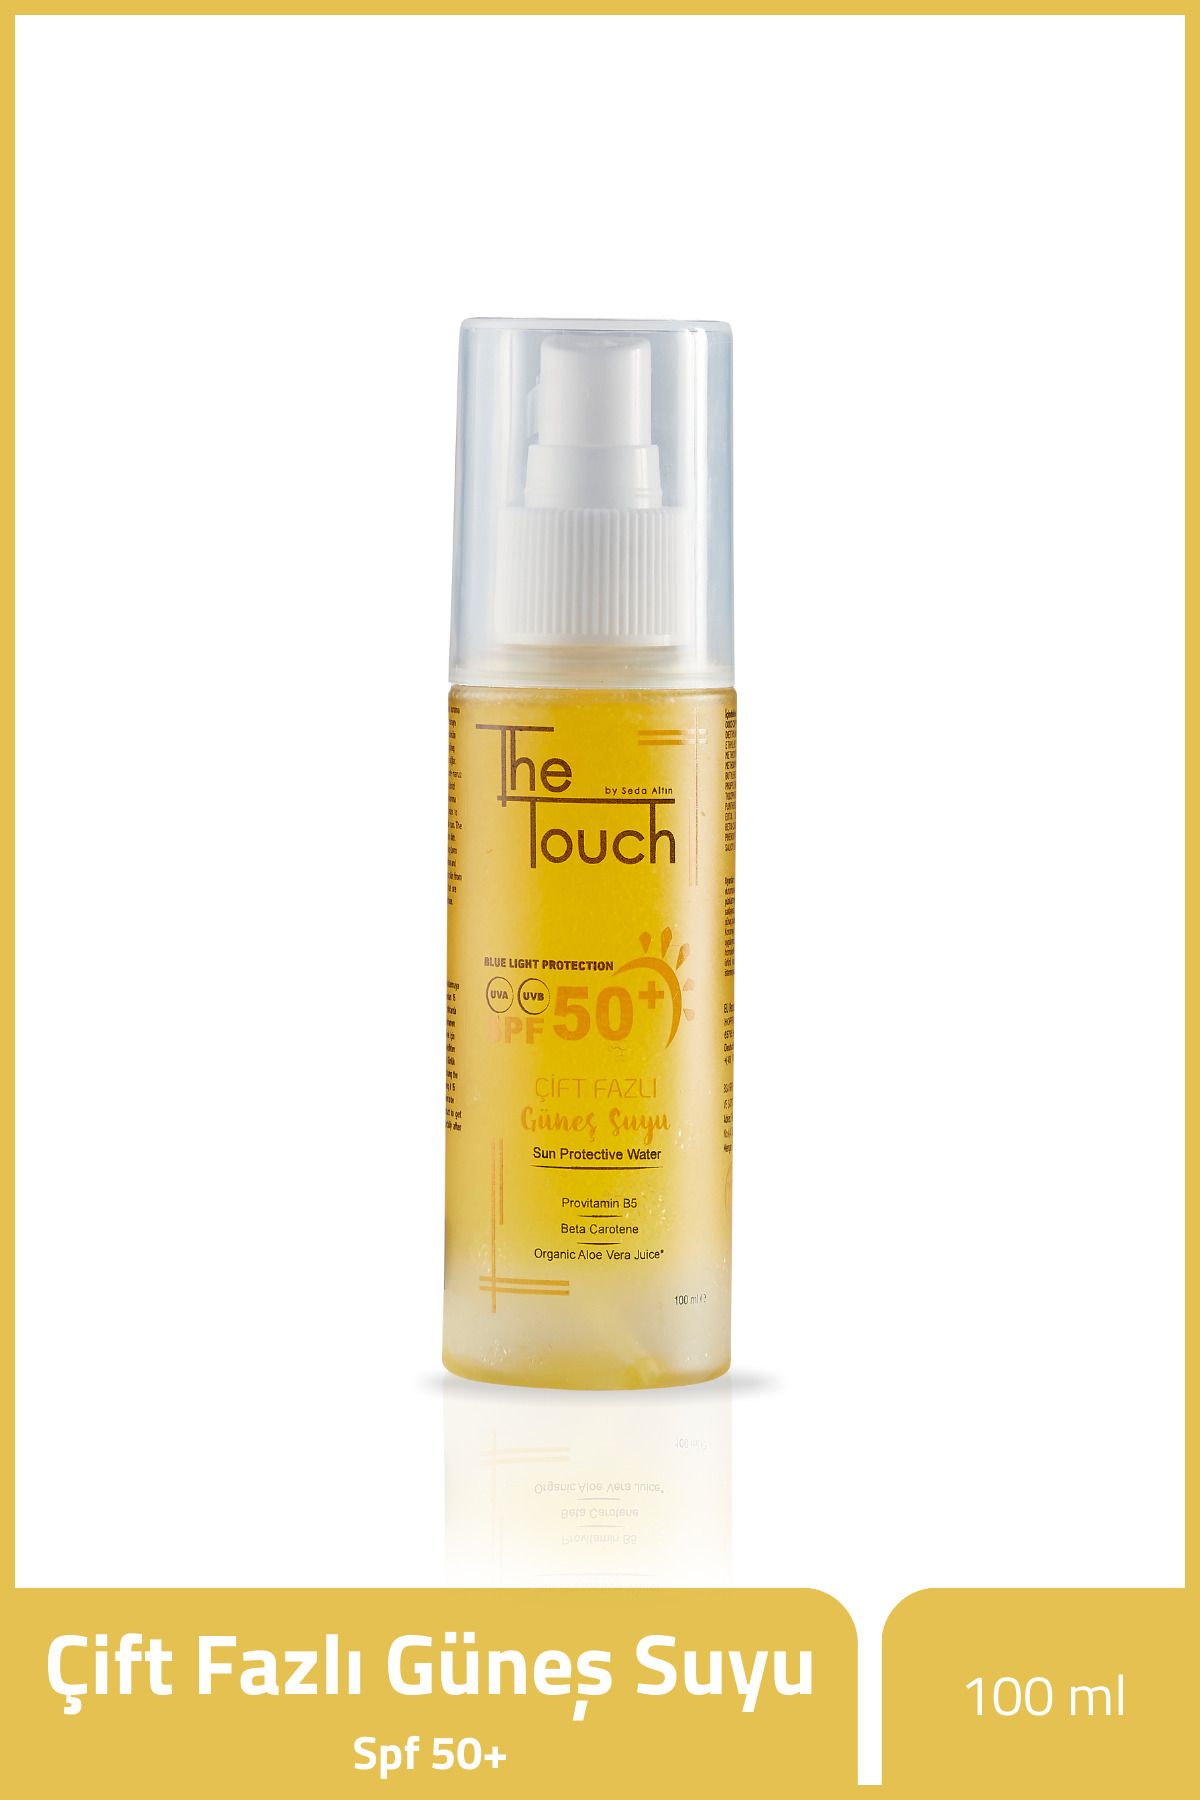 The Touch By Seda Altın Çift Fazlı Güneş Suyu 50+ SPF 100 ml